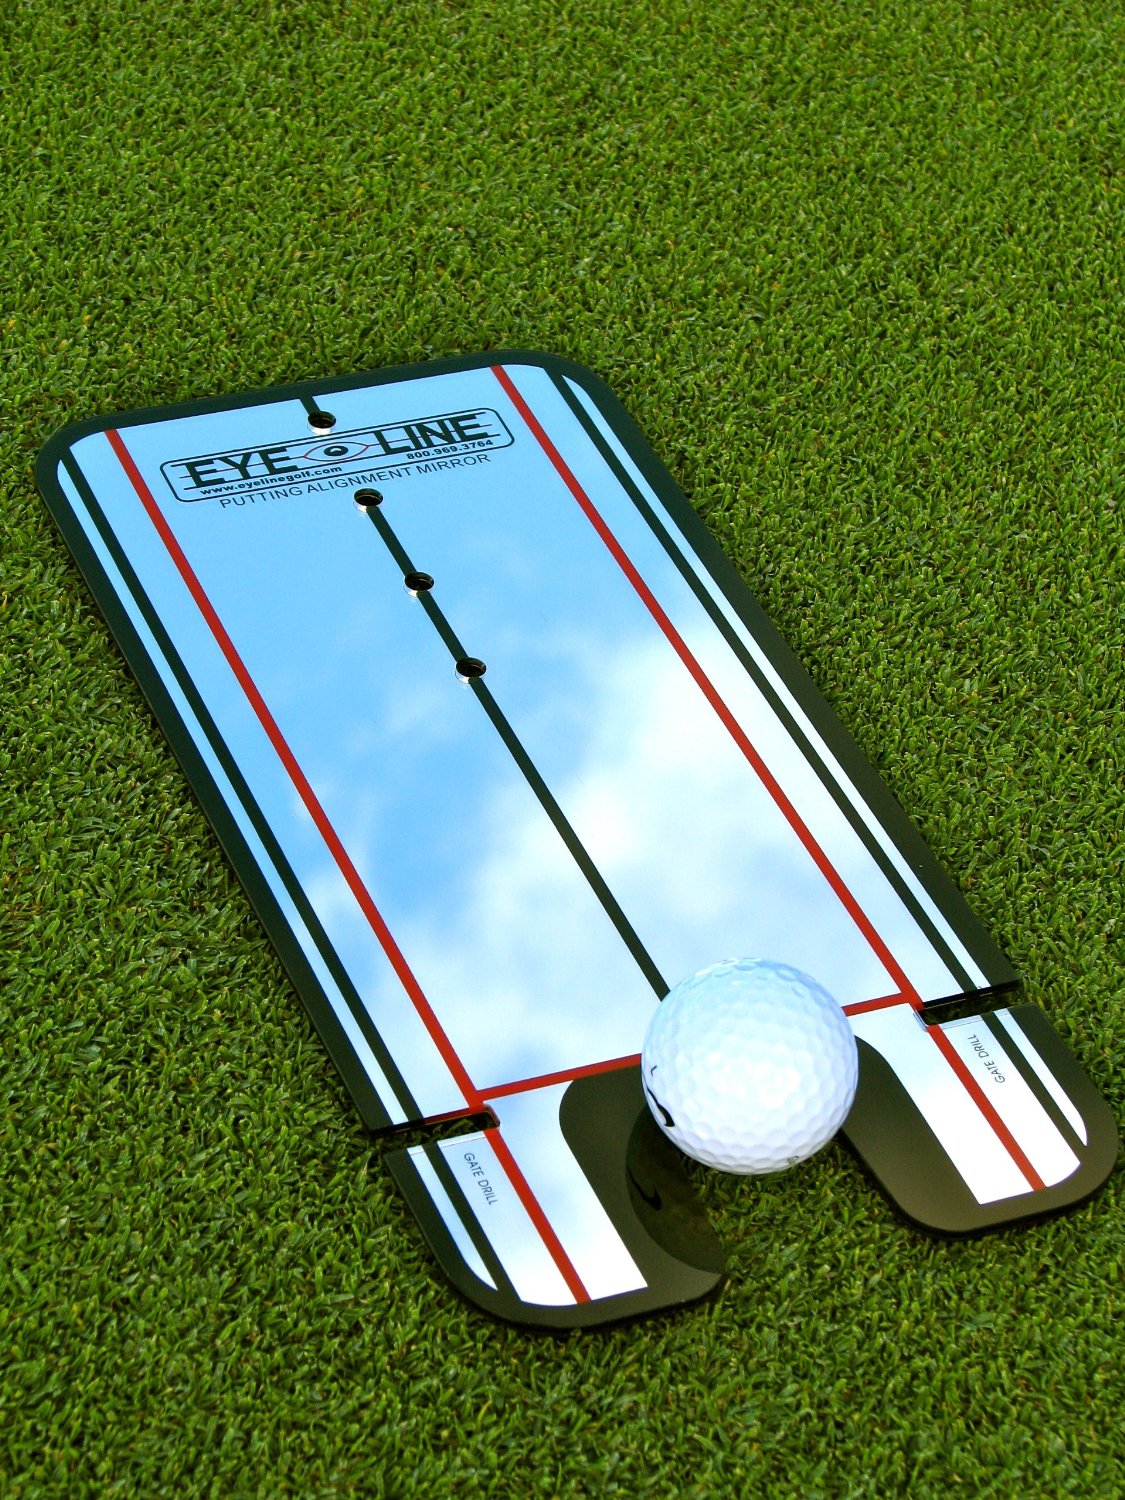 Eyeline Golf Putting Alignment Mirrors